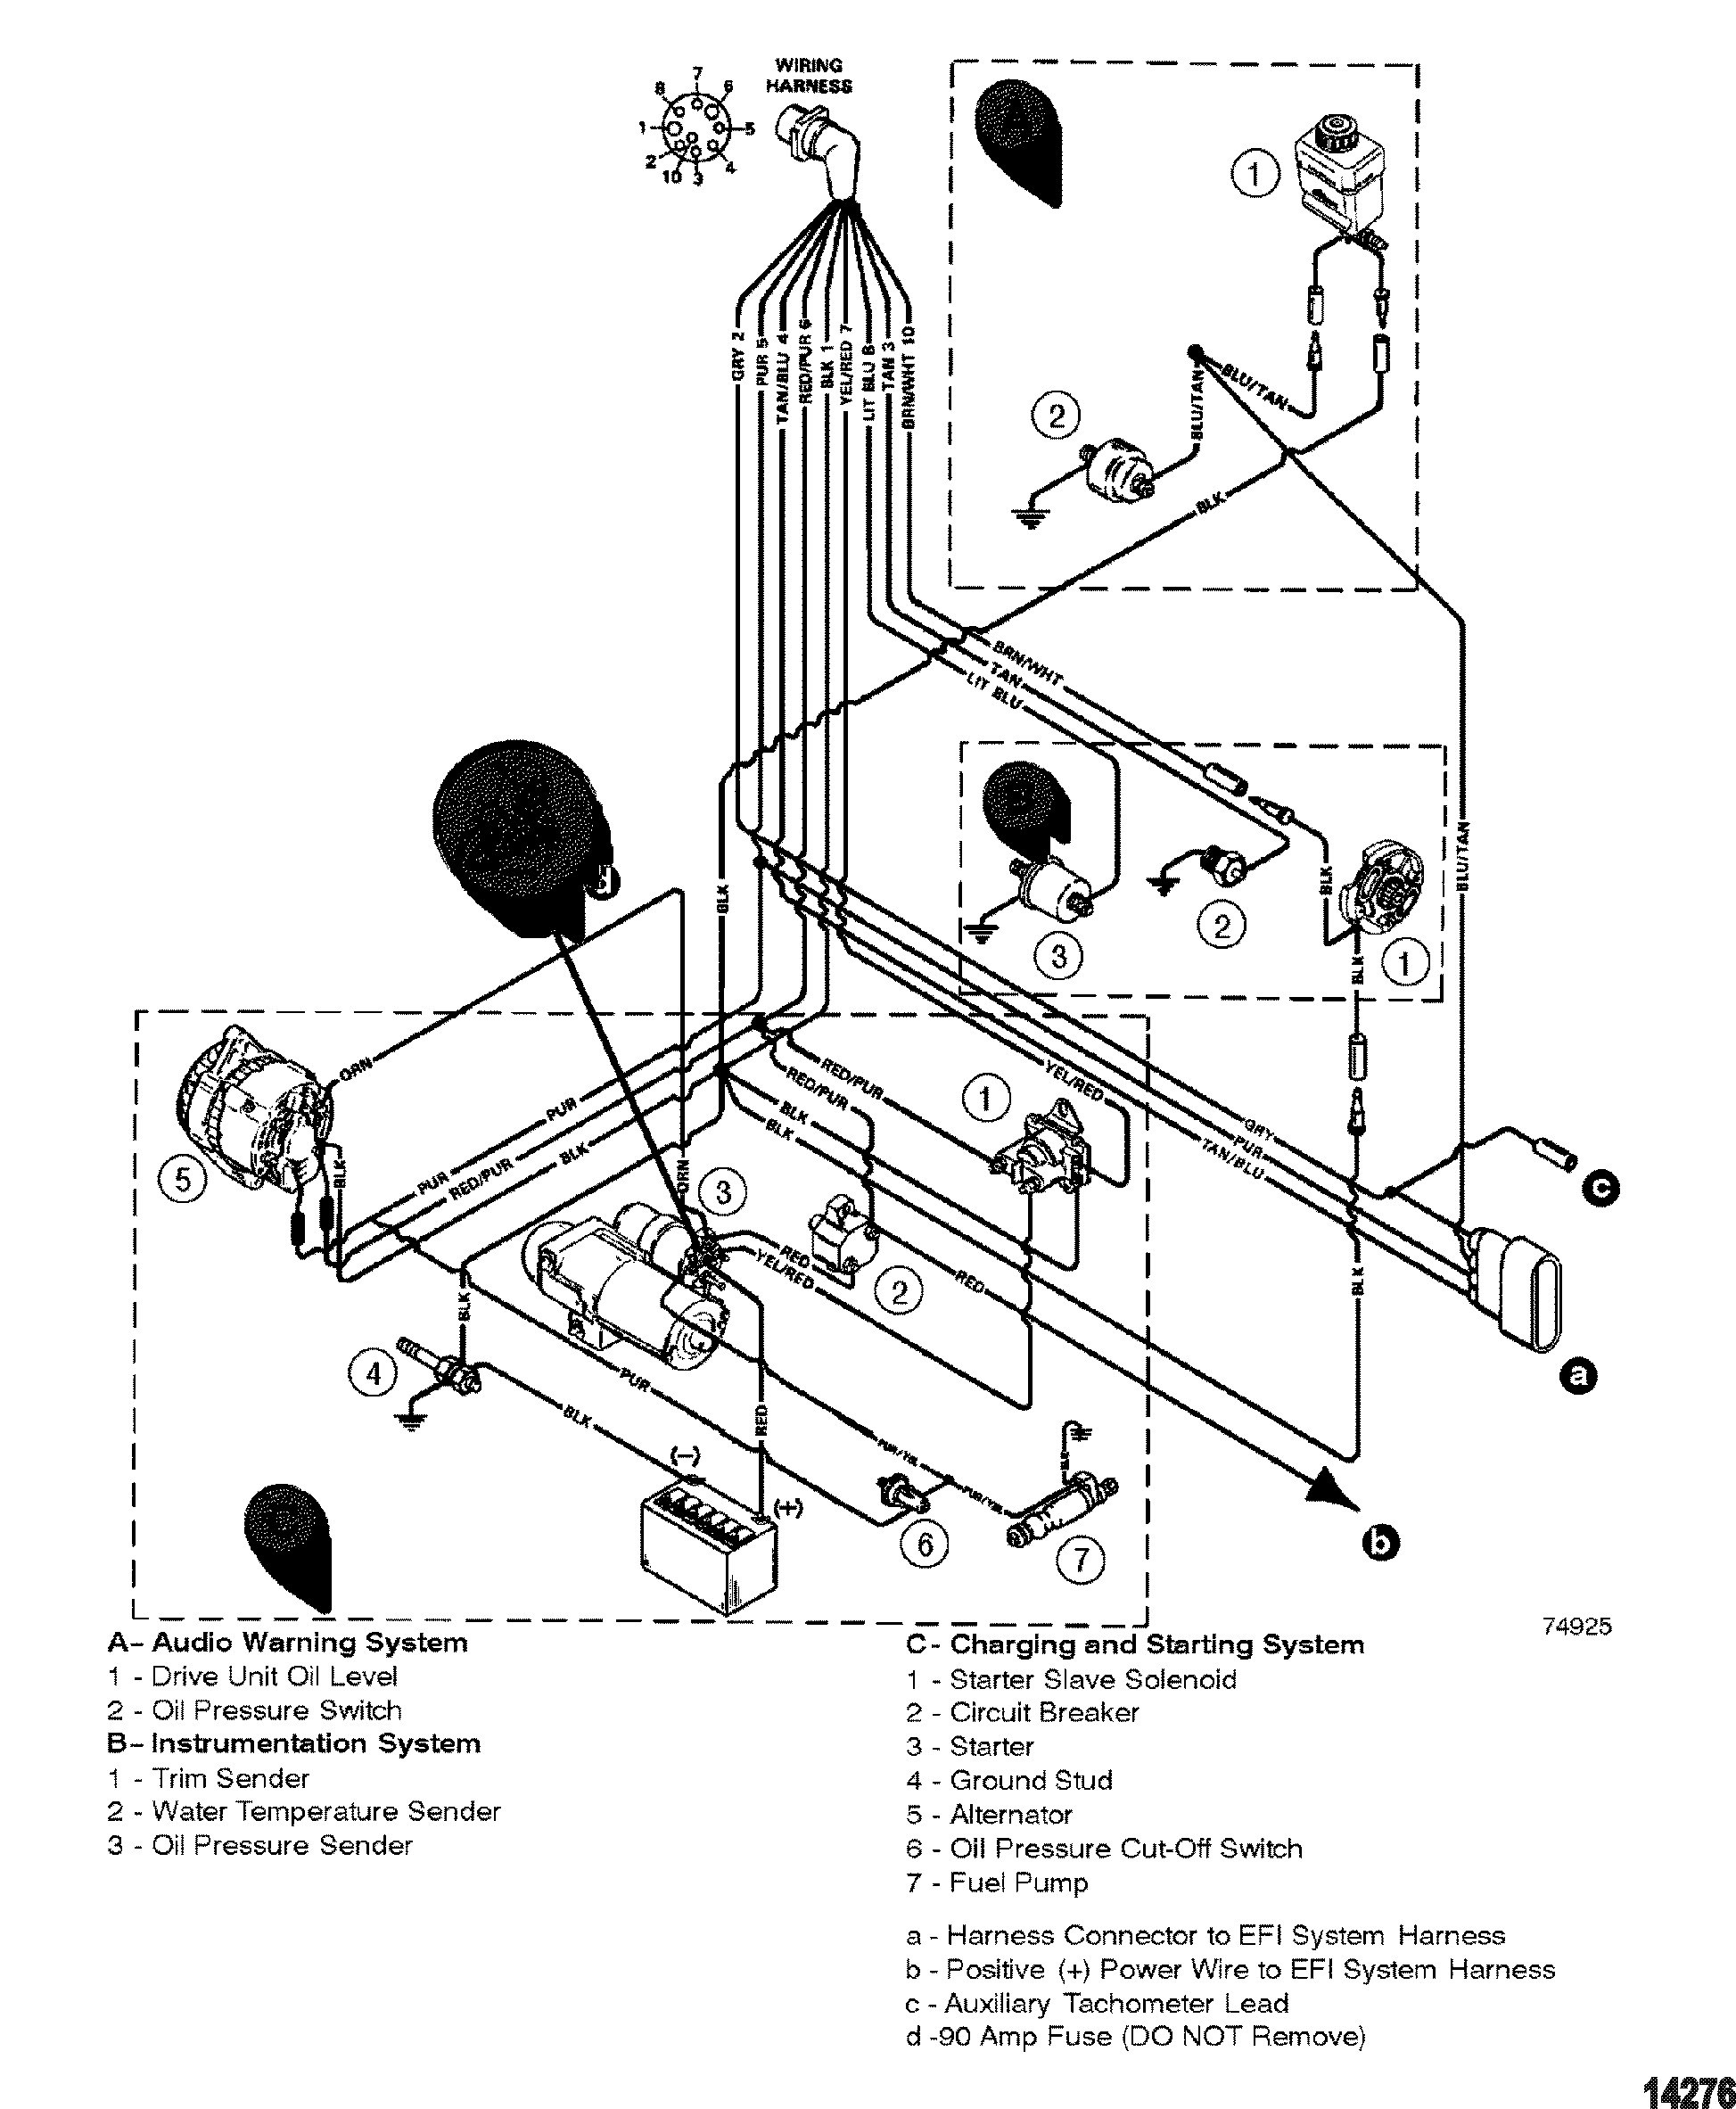 Ebook-9159] Mercruiser Trim Sender Wiring Diagram User Manual | 2019 - Mercruiser Trim Sender Wiring Diagram